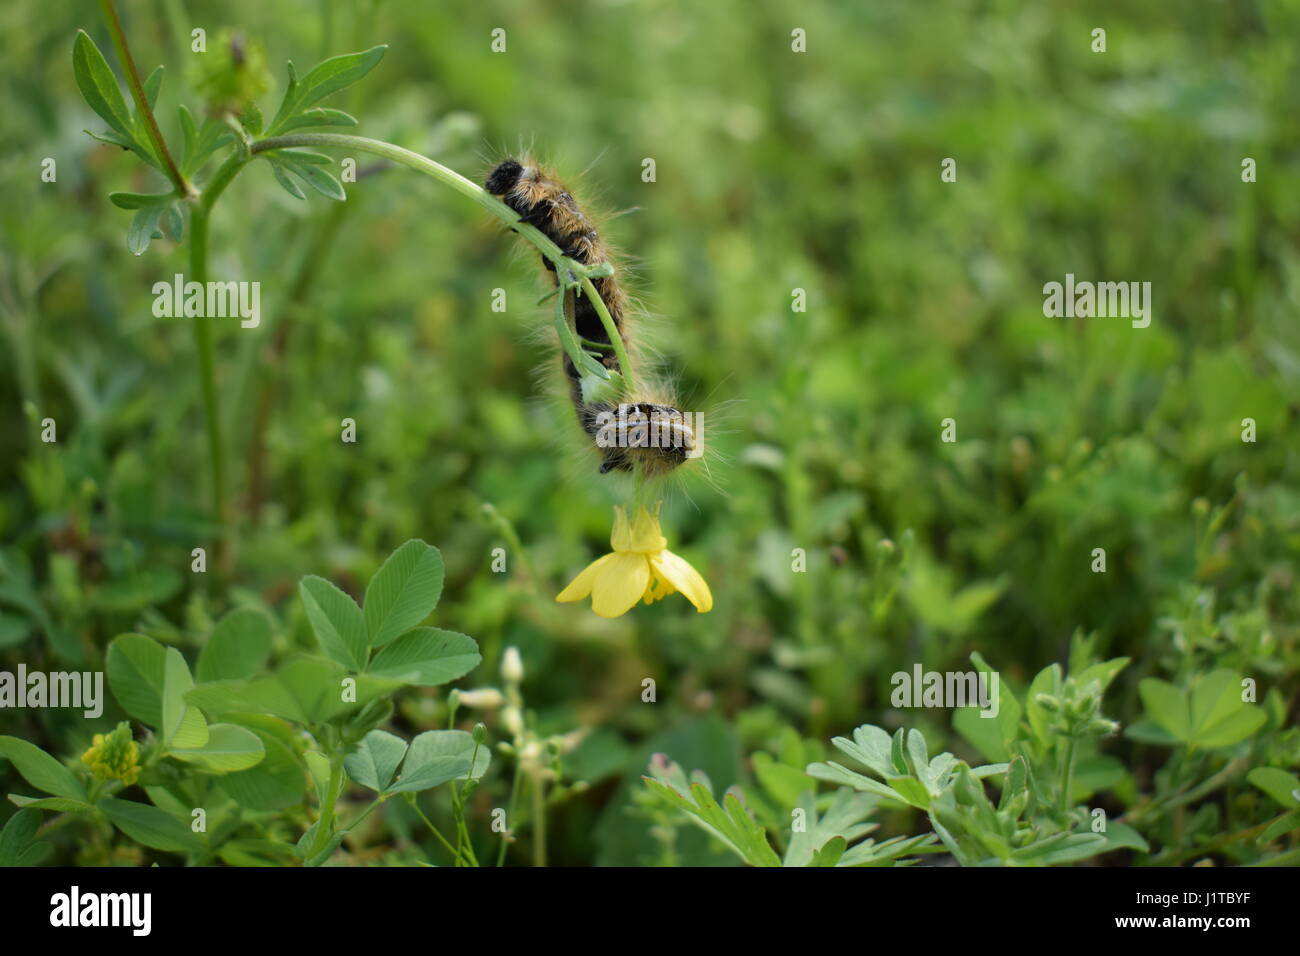 caterpillar climbing up yellow flower and smiling boy Stock Photo